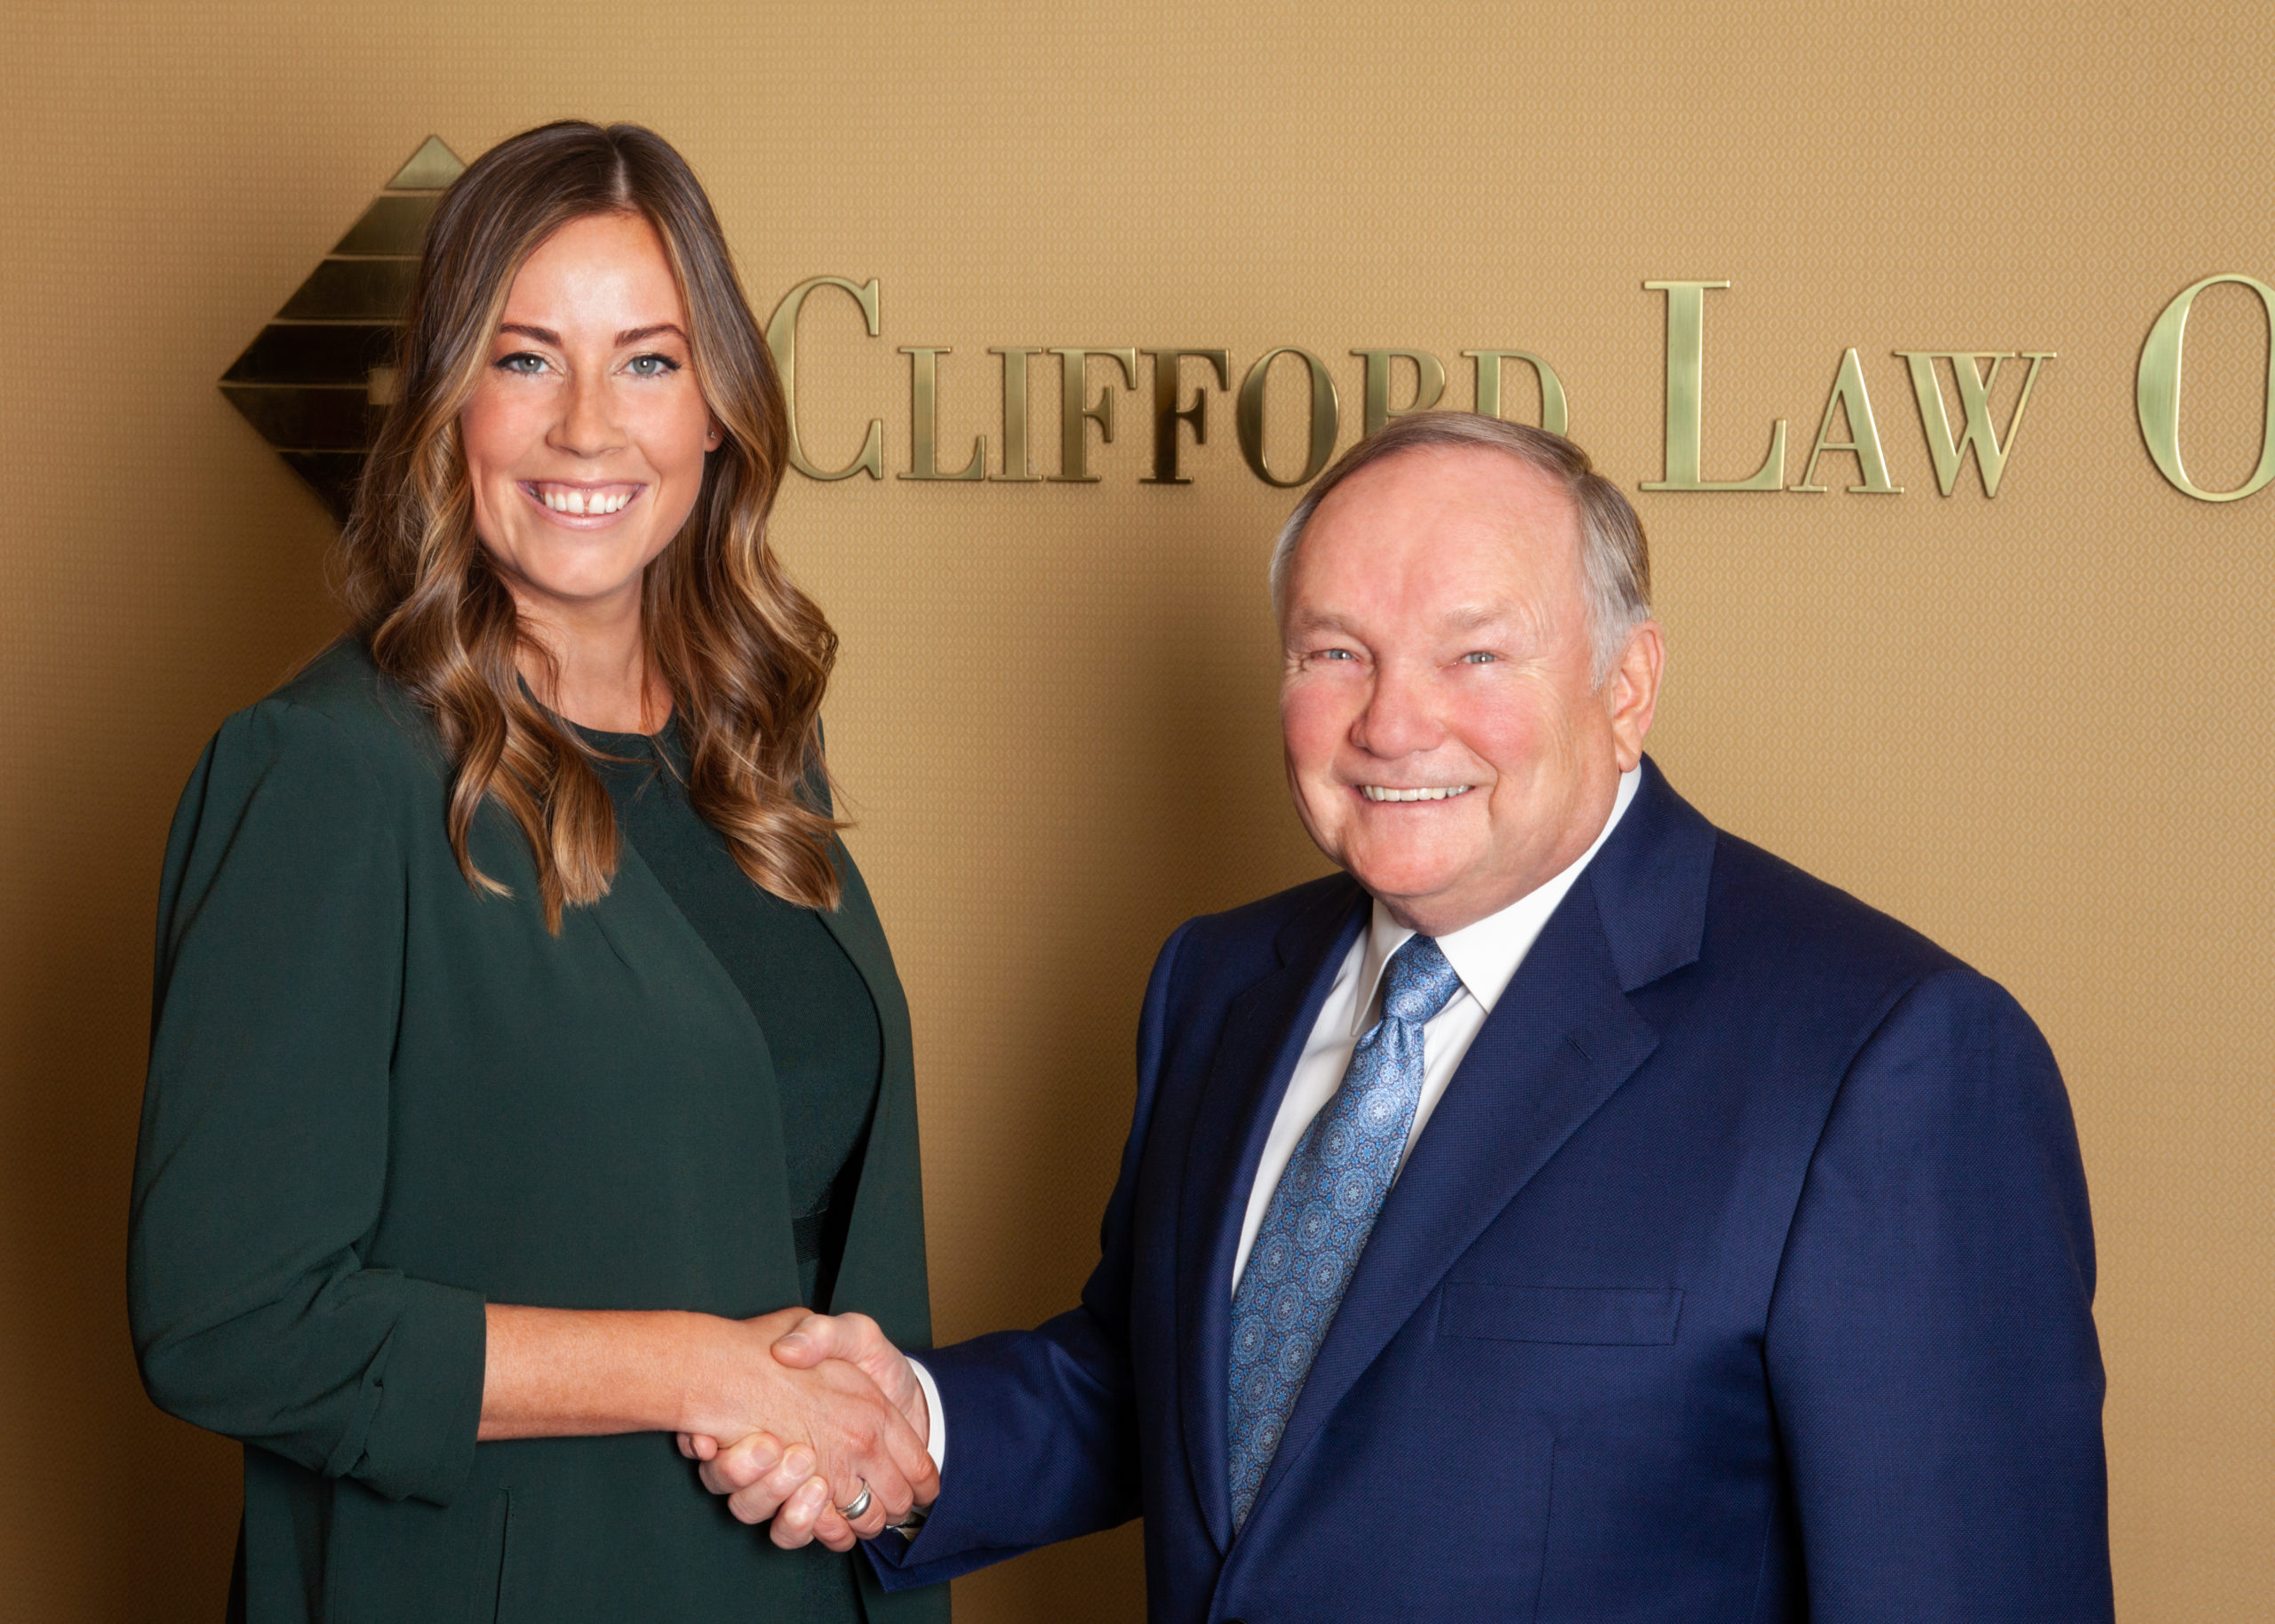 Sarah F. King Partner at Clifford Law Offices